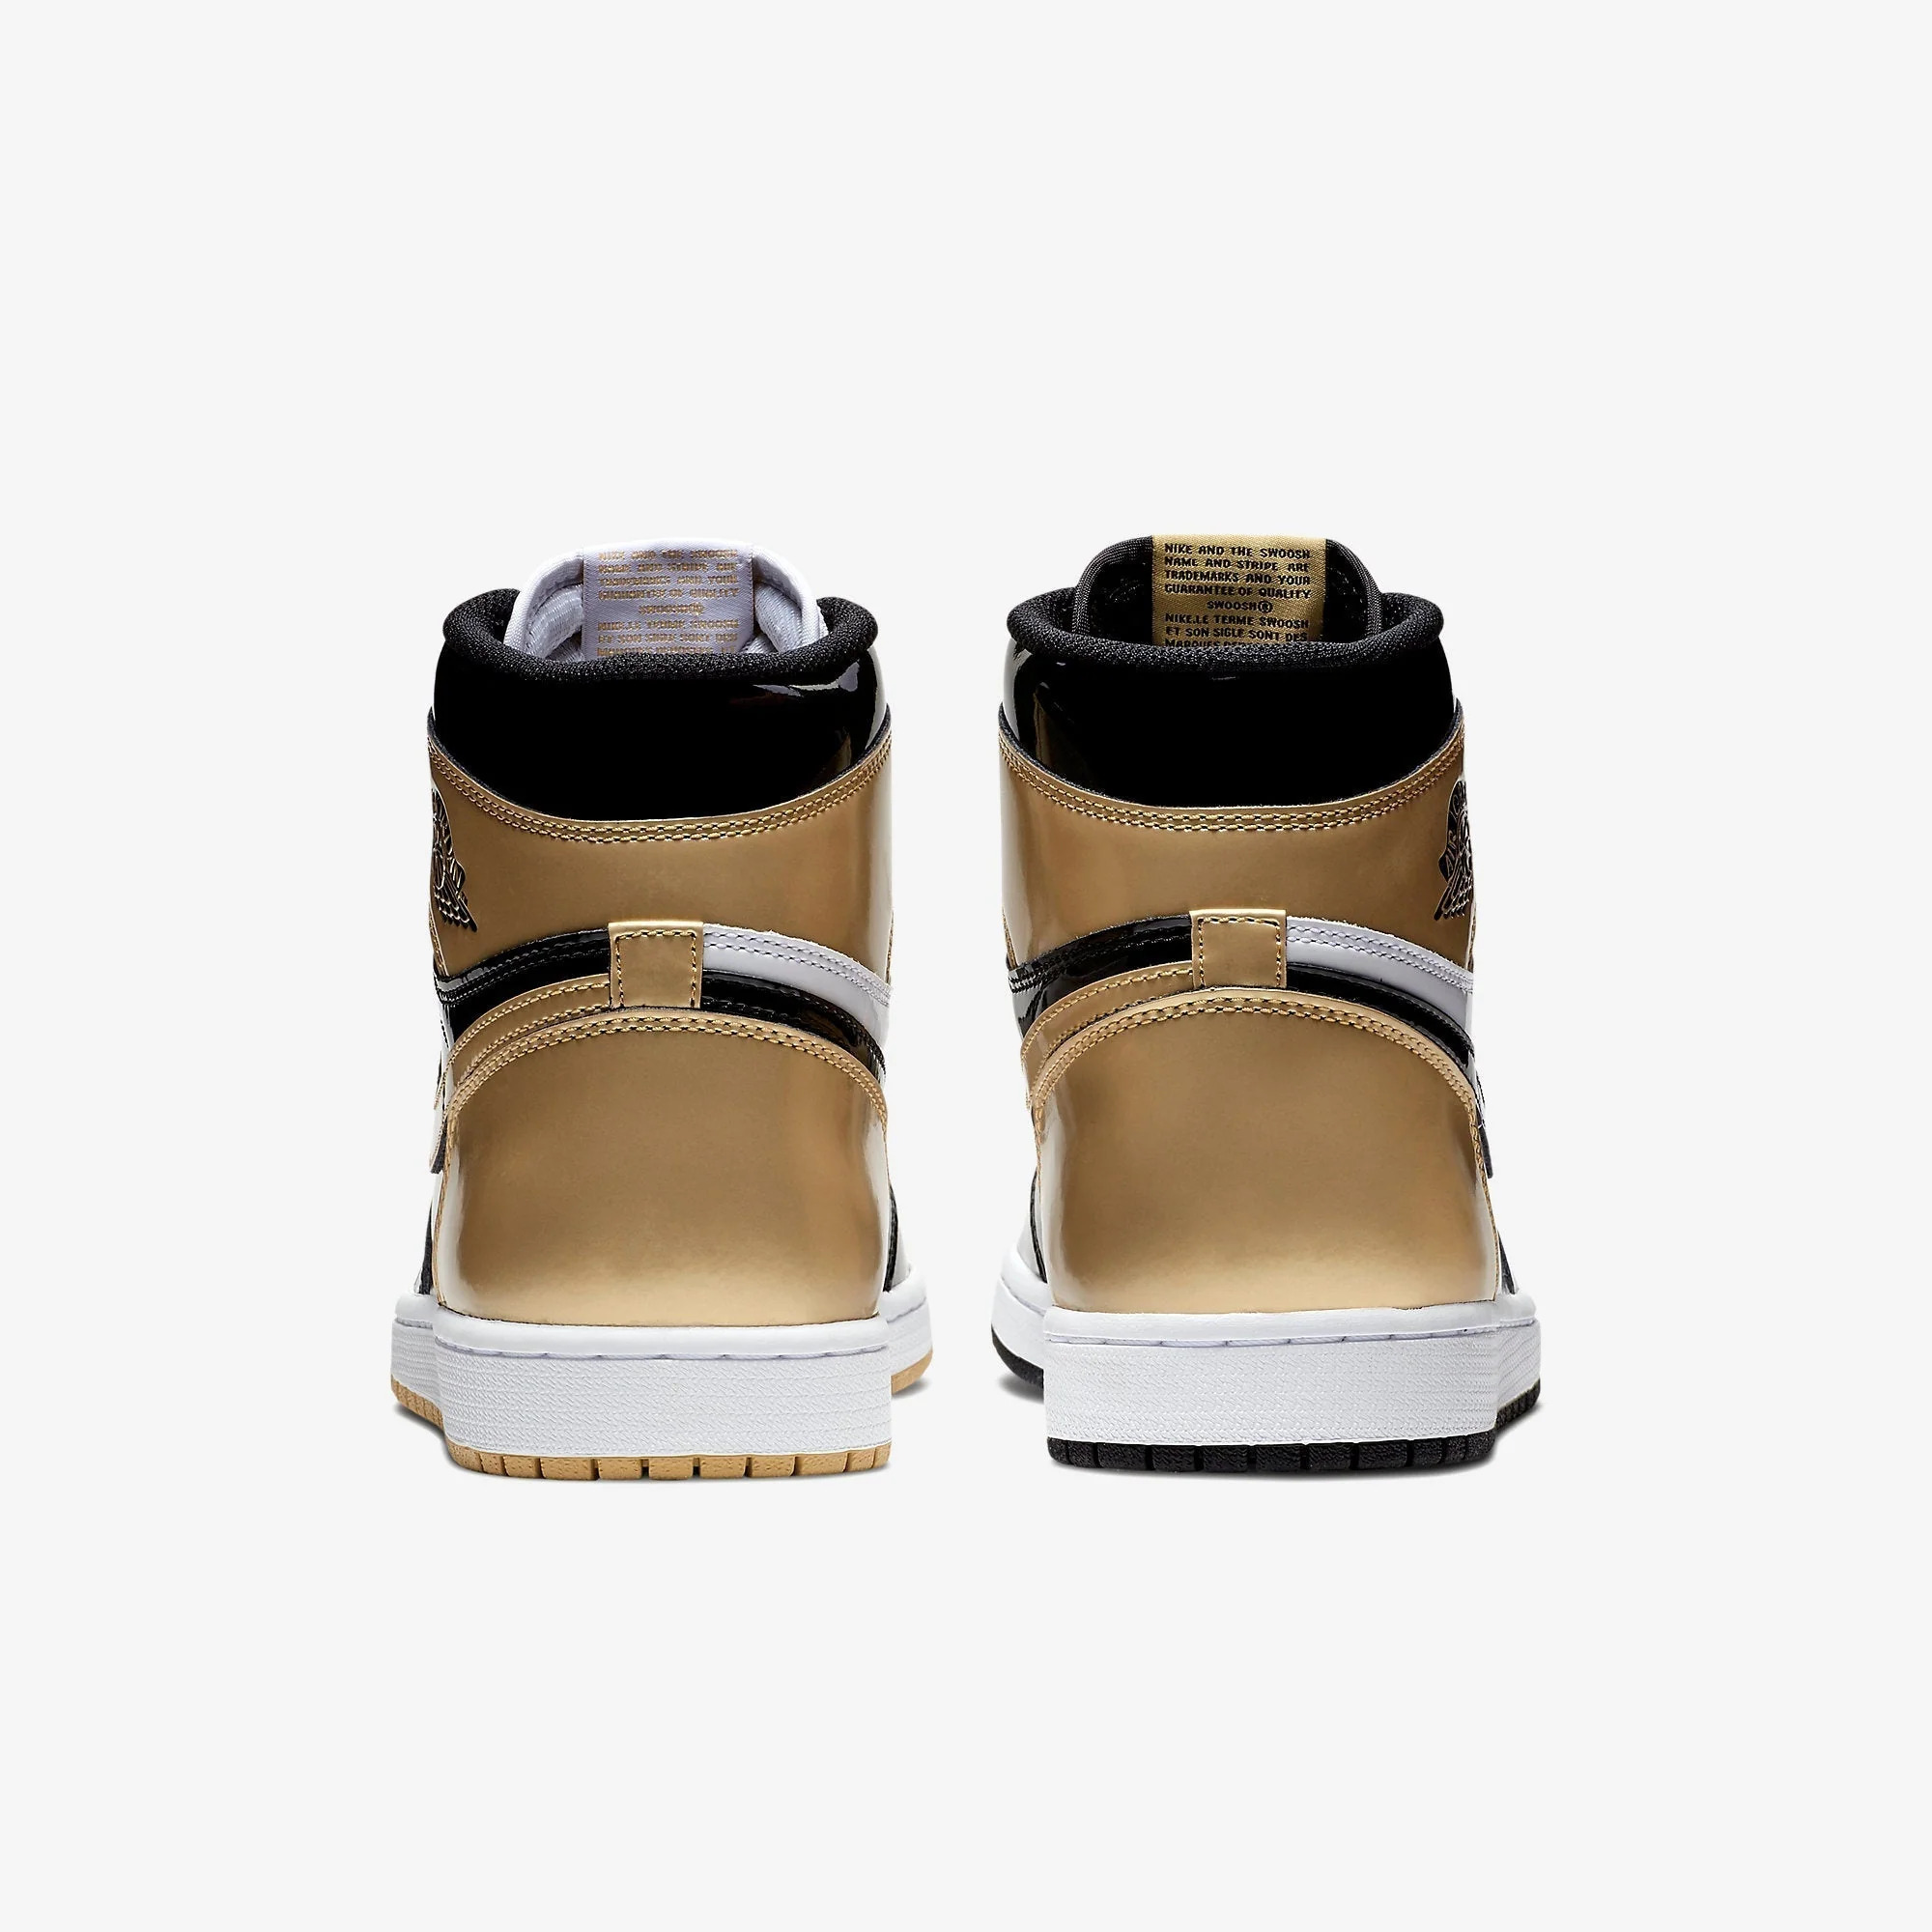 Nike Mens Air Jordan 1 Retro High OG NRG Top 3" Black/Metallic Gold Leather Size 10.5 - image 5 of 6